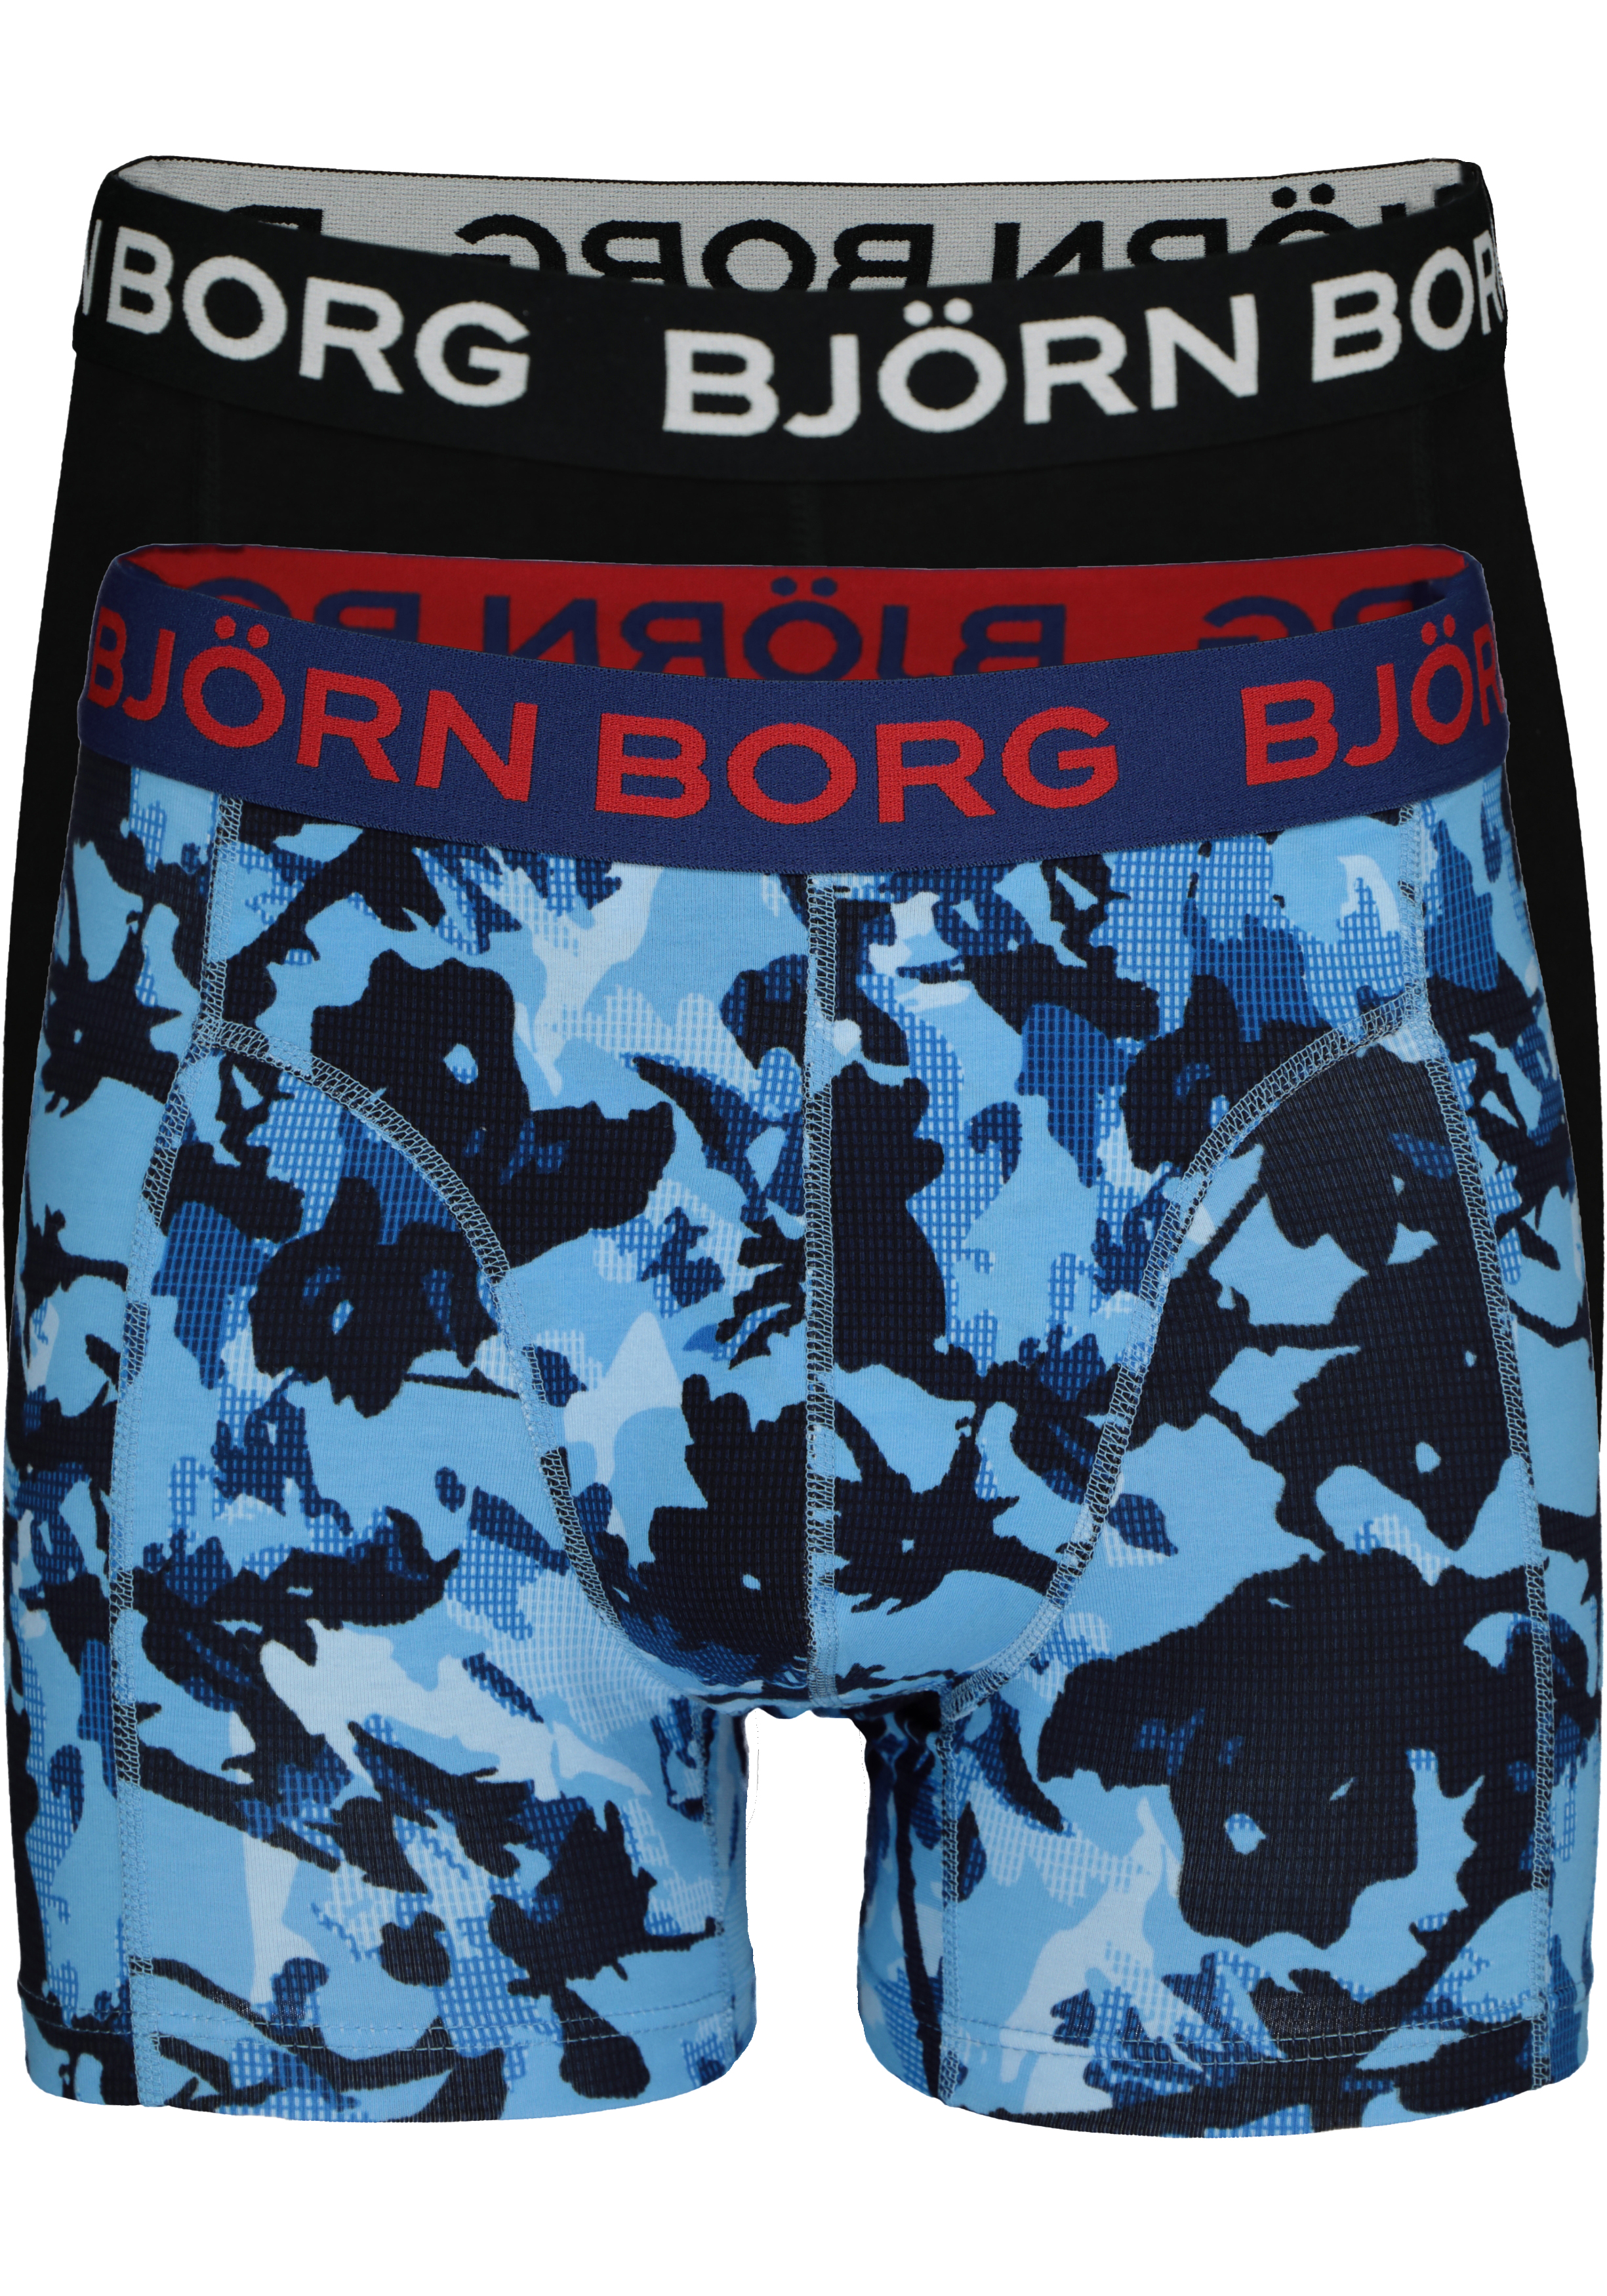 smeren nederlaag kromme Bjorn Borg Cotton Stretch Shorts (2-pack), heren boxers normale lengte,...  - SALE tot 70% korting